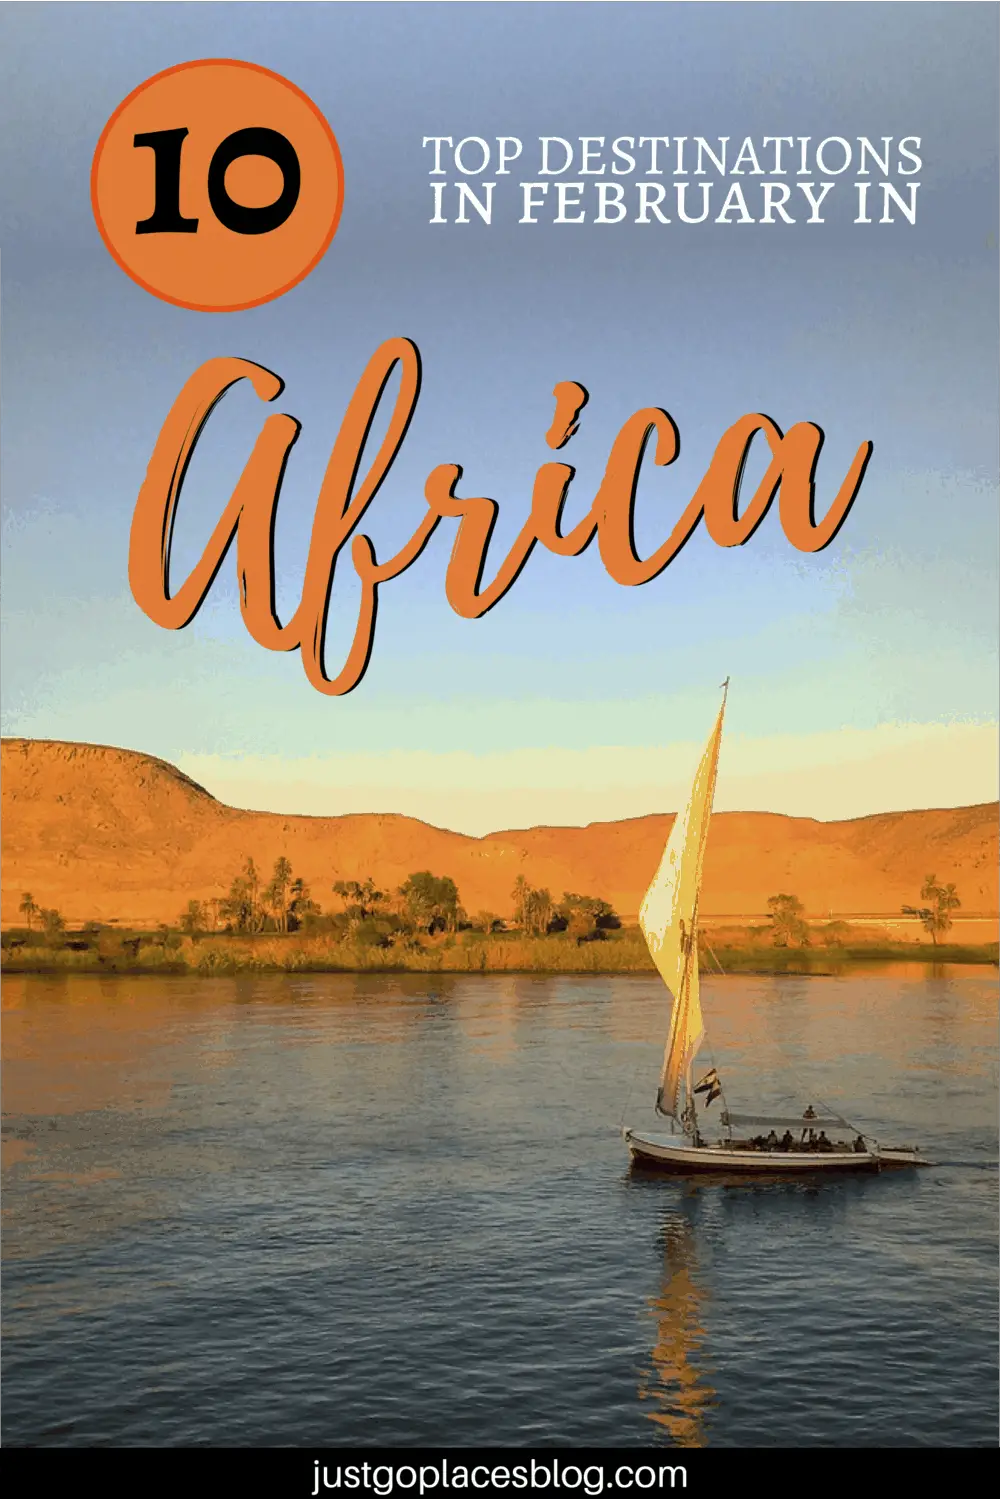 10 Top destinations in February in Africa